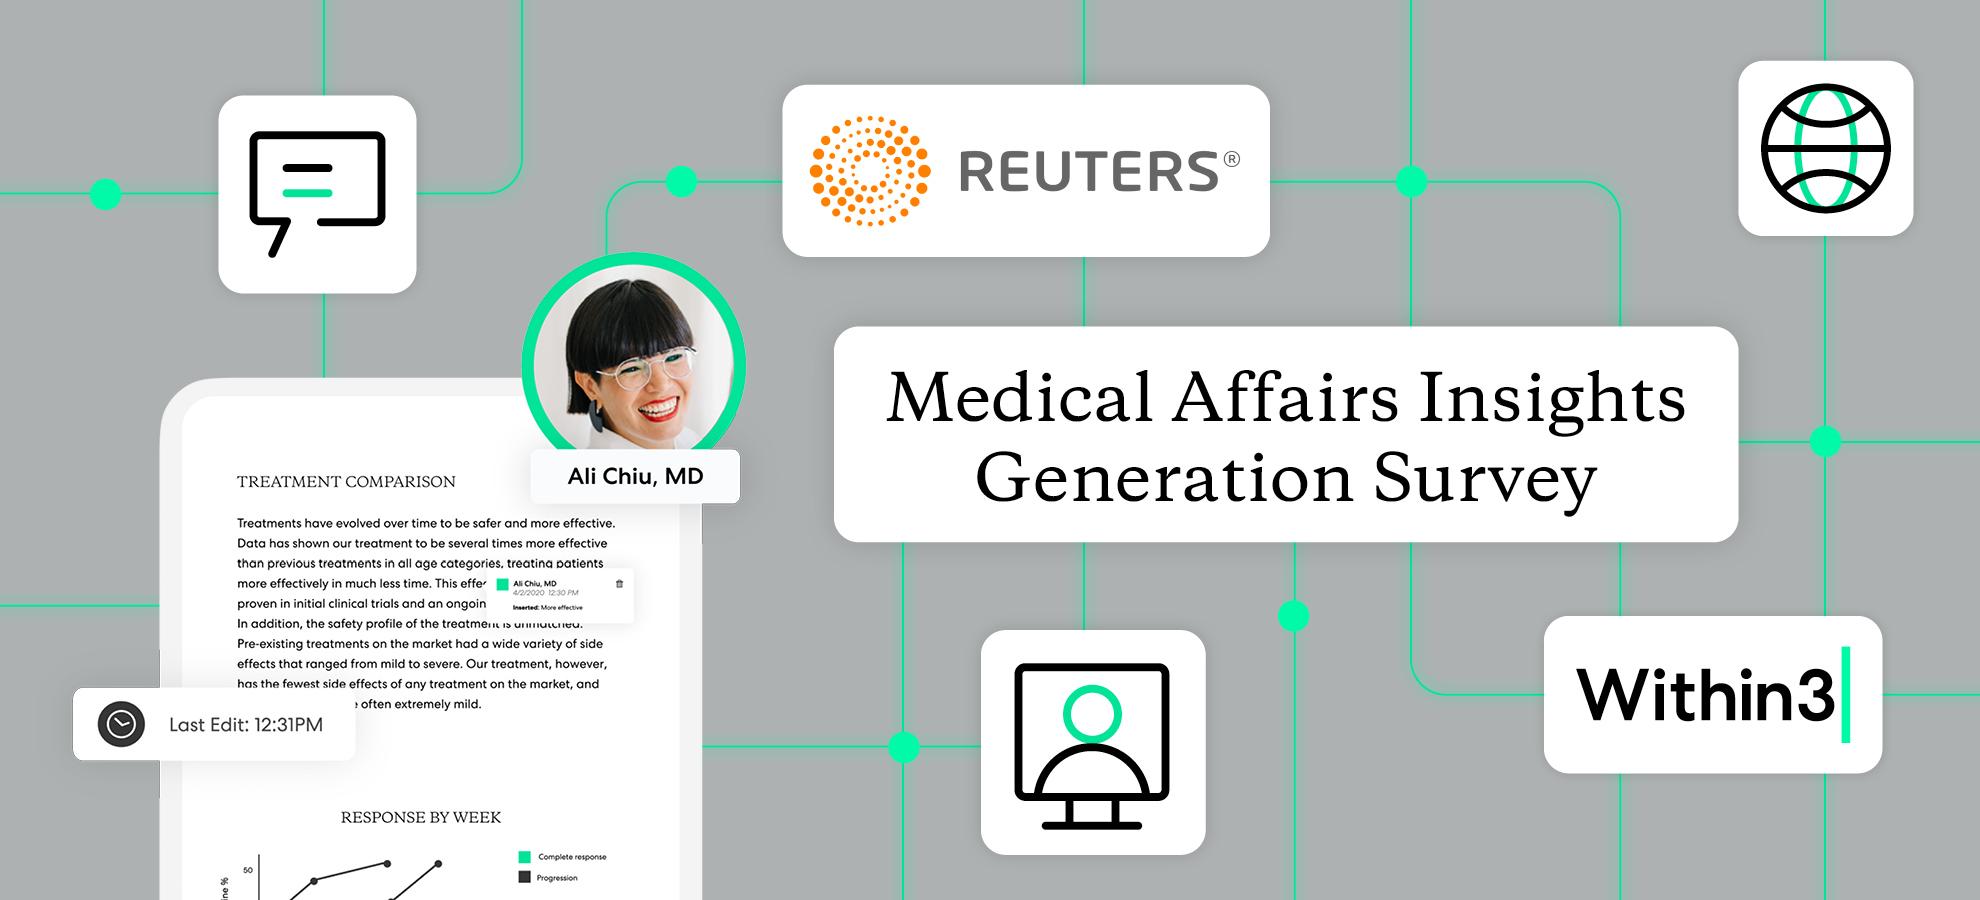 medical affairs insights generation